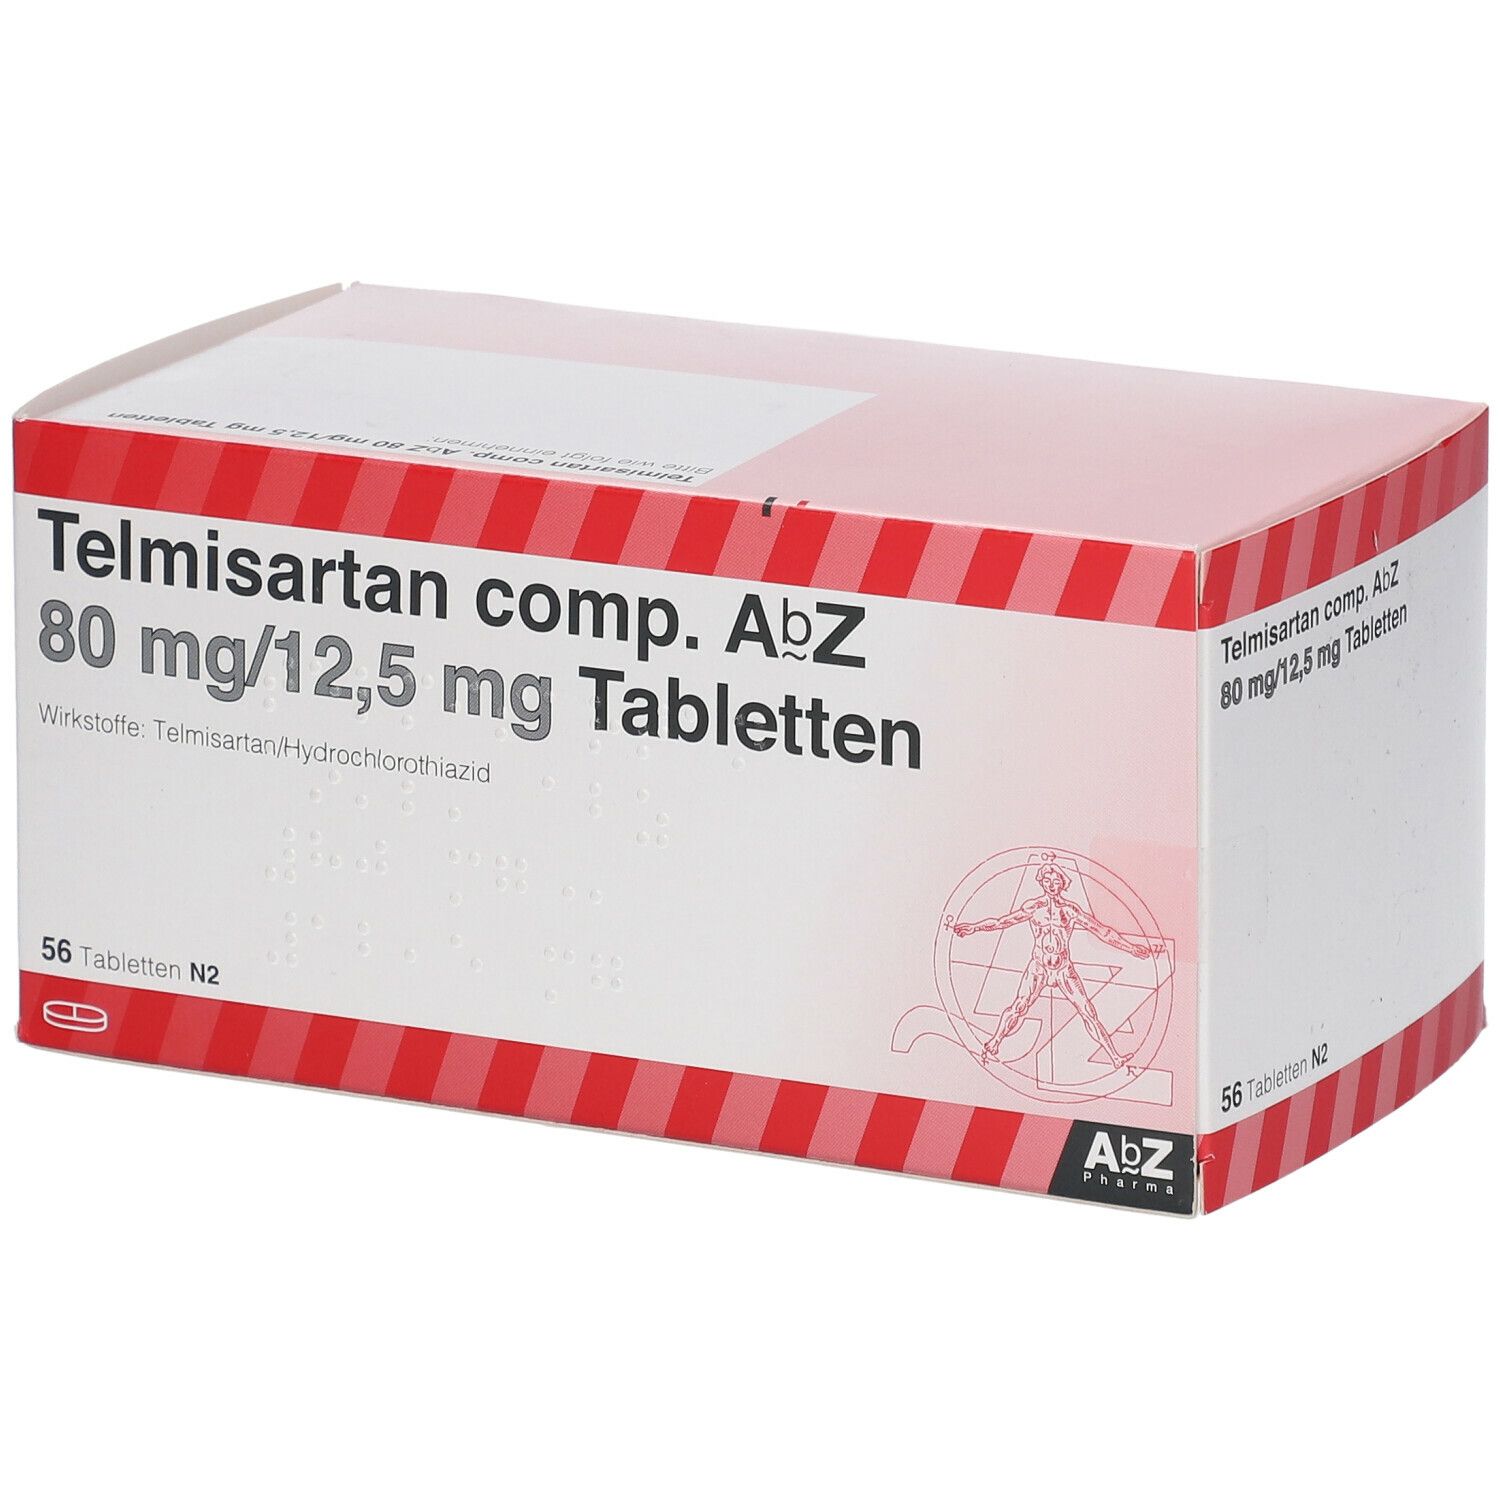 Telmisartan comp. AbZ 80 mg/12,5 mg